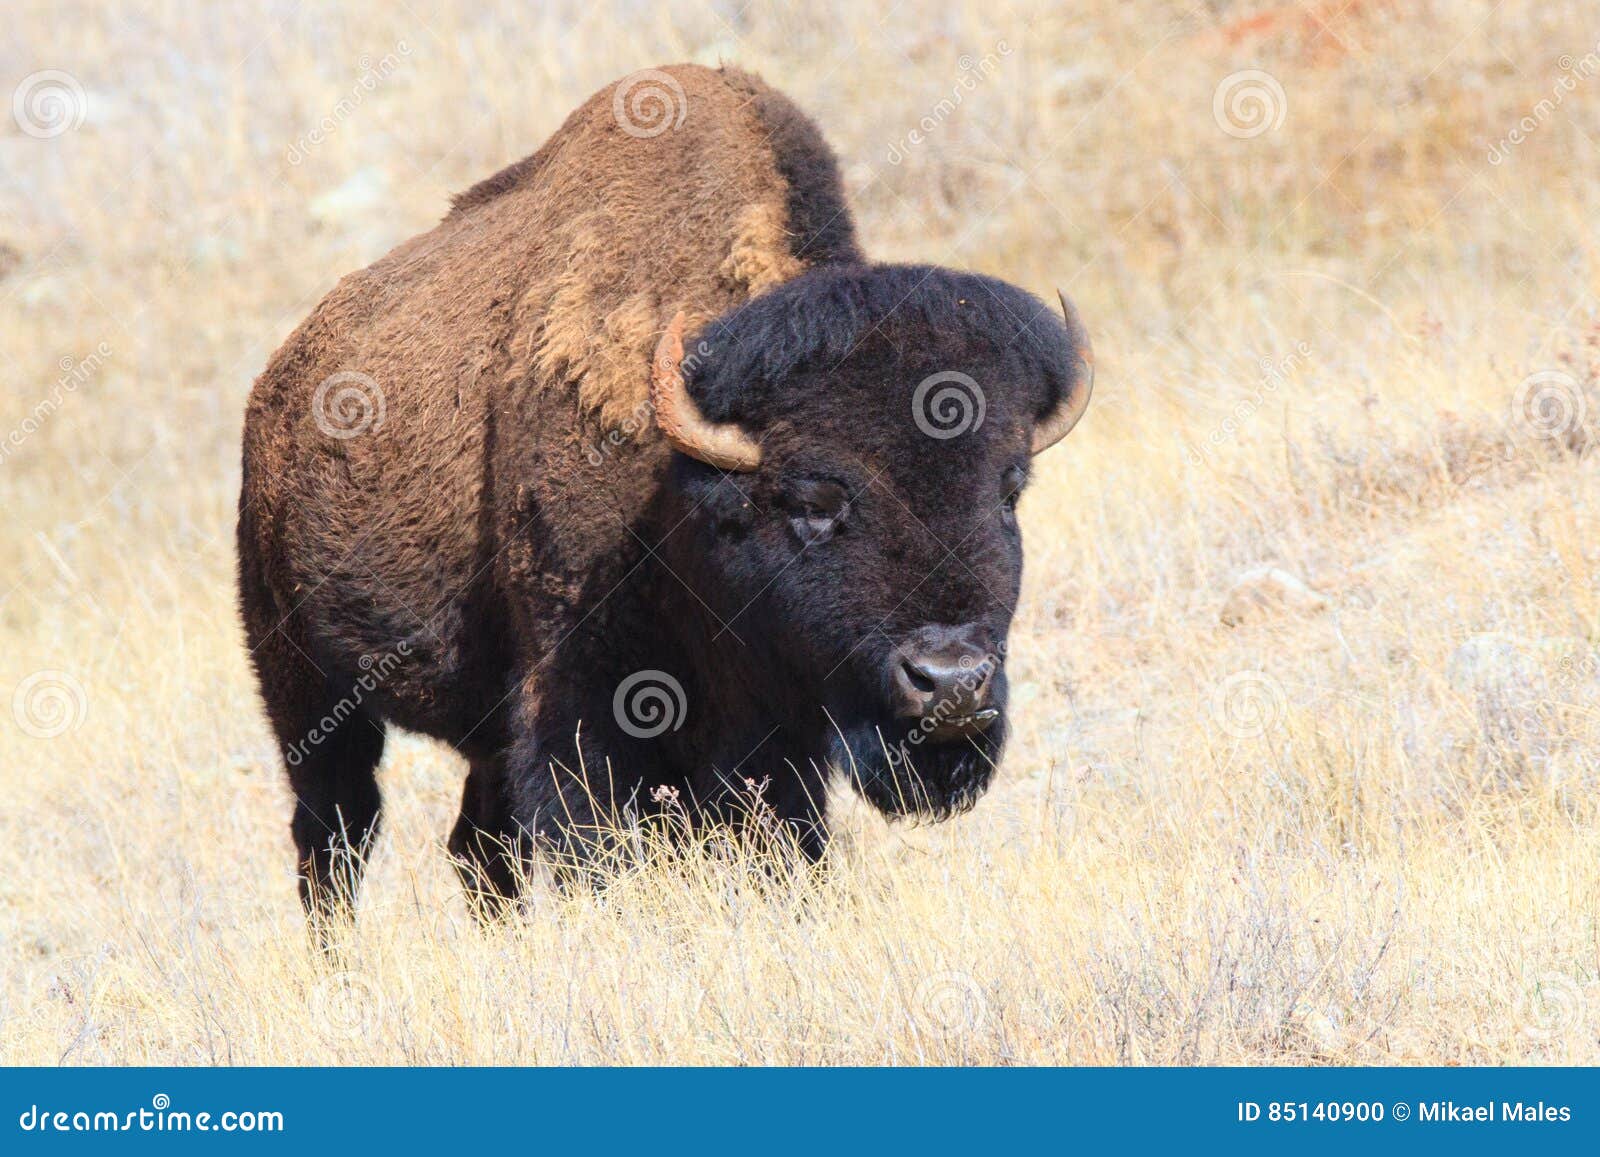 oklahoma plains buffalo